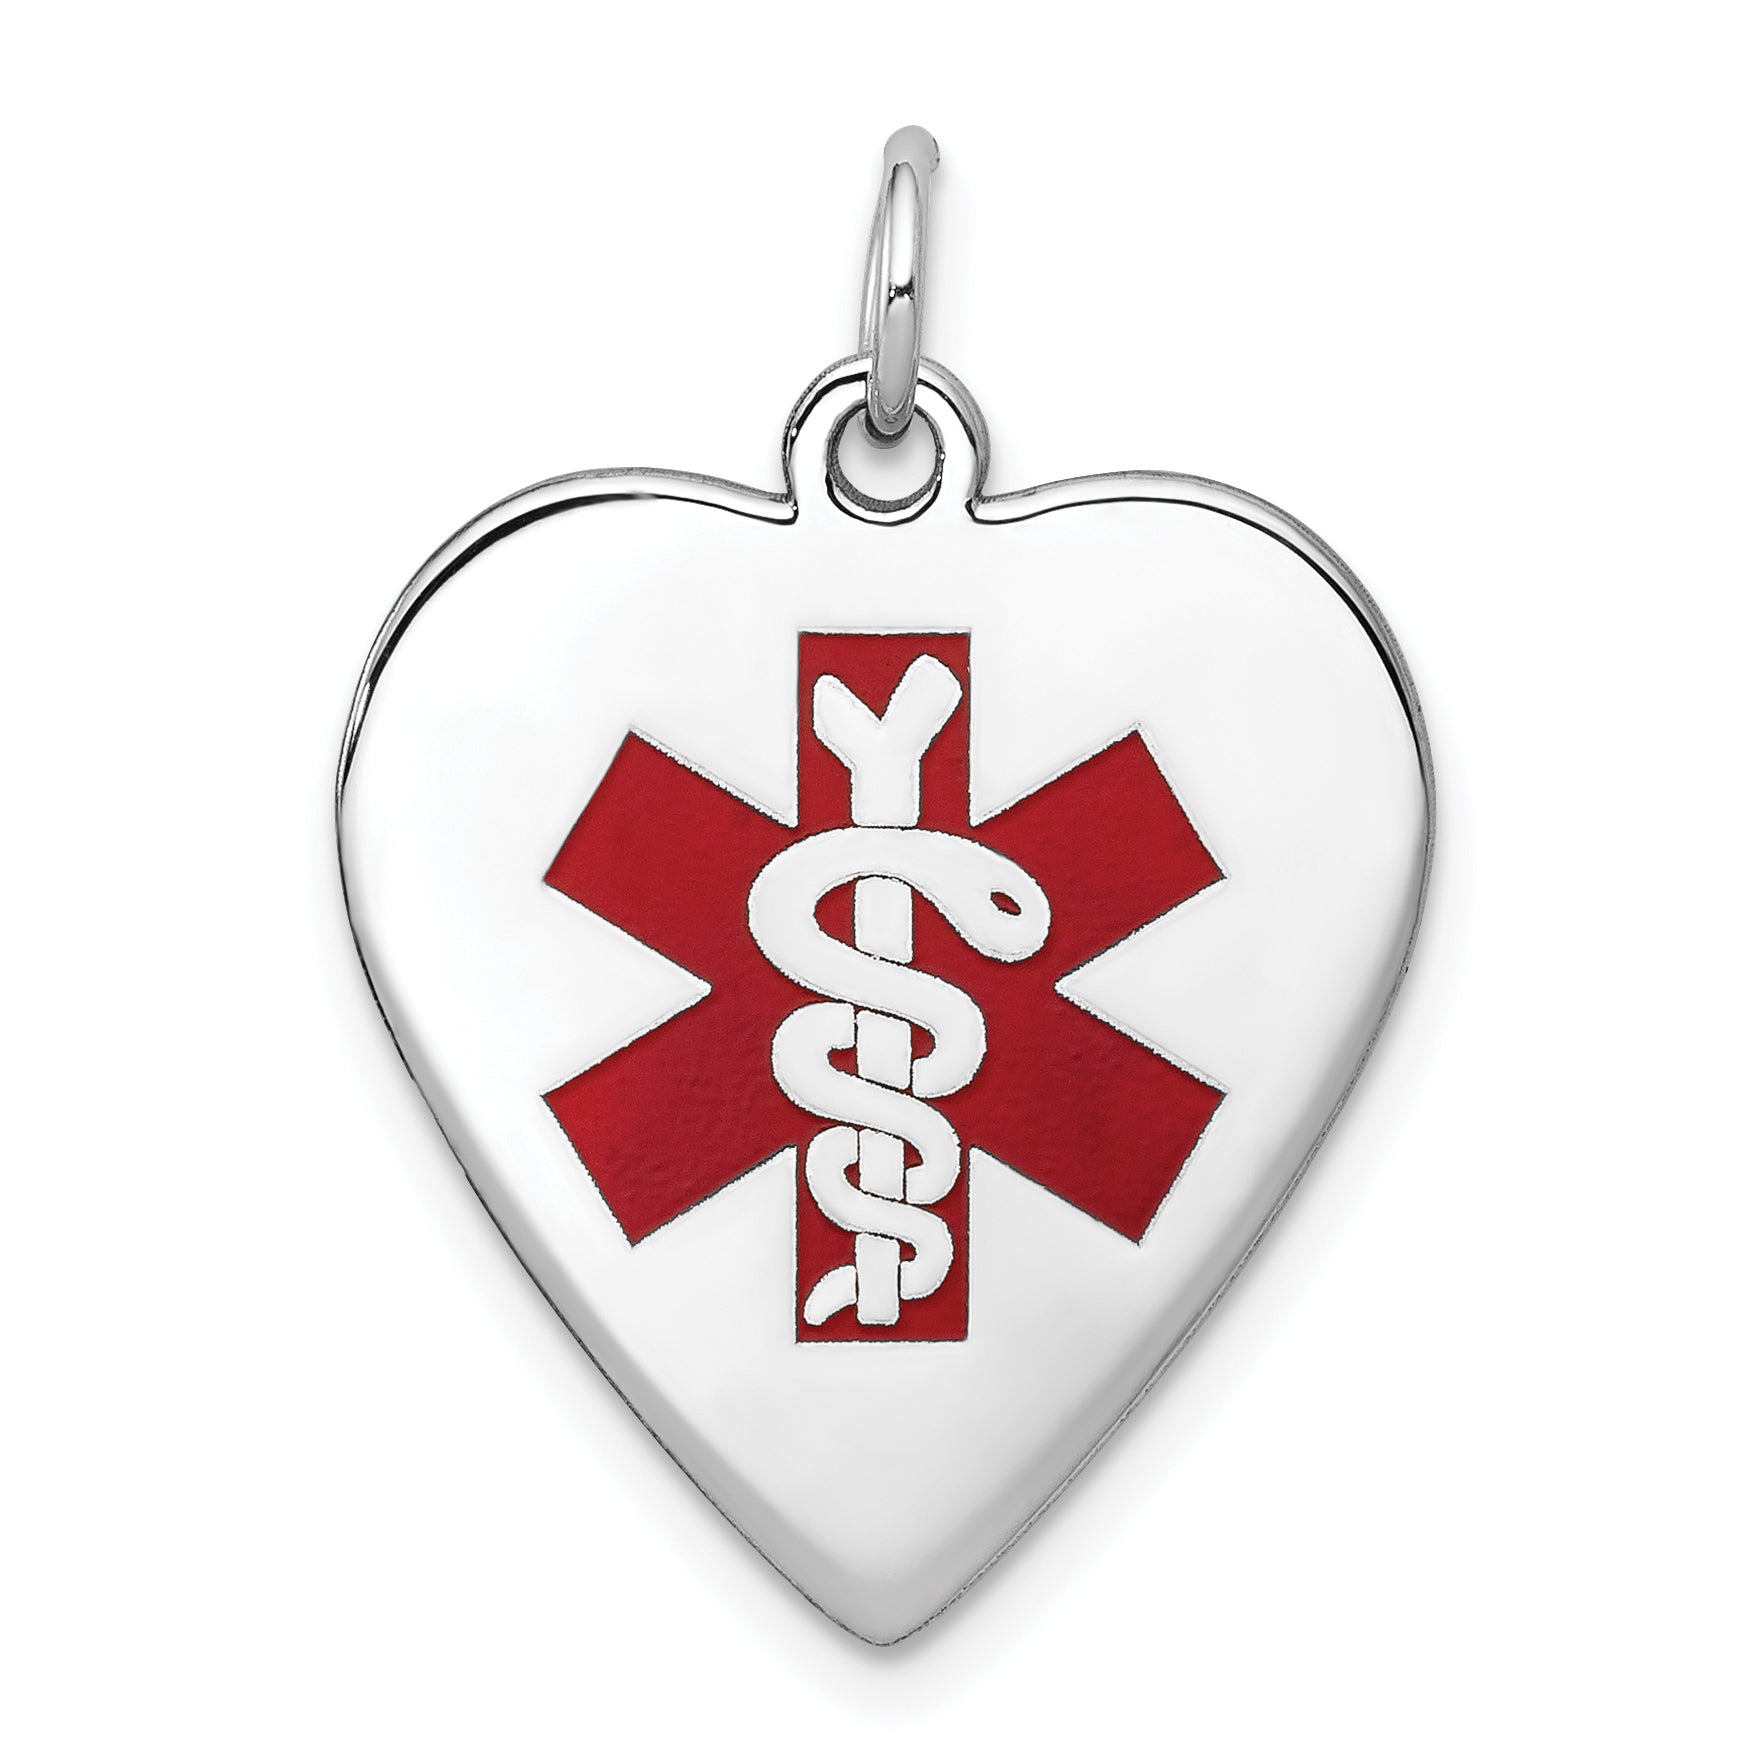 14k White Gold Heart-Shaped Enameled Medical Jewelry Pendant